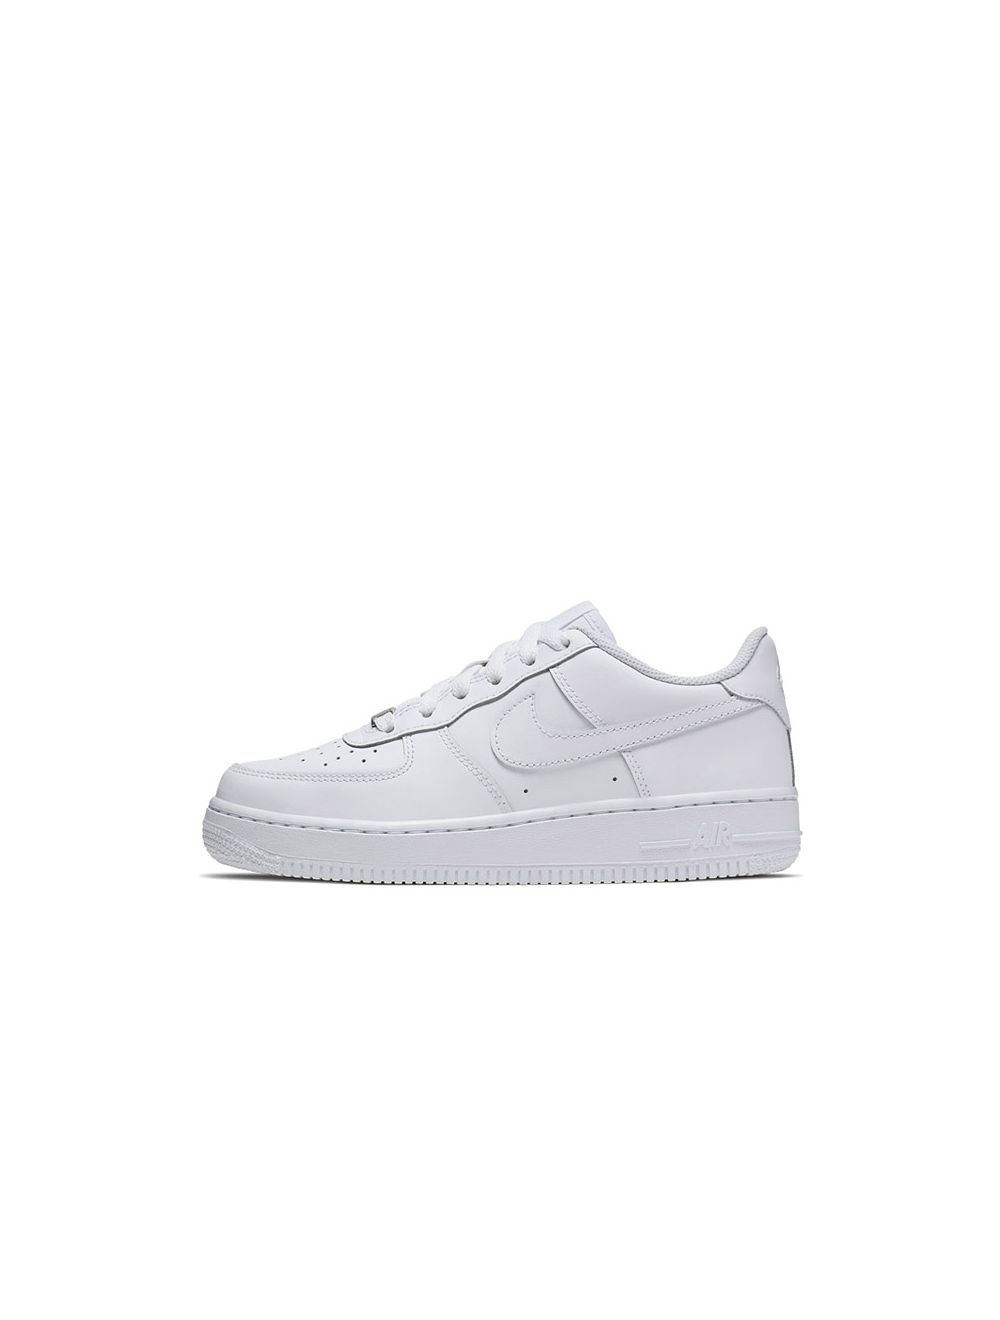 Buy Nike Air Force 1 Youth Sneaker White | Studio 88